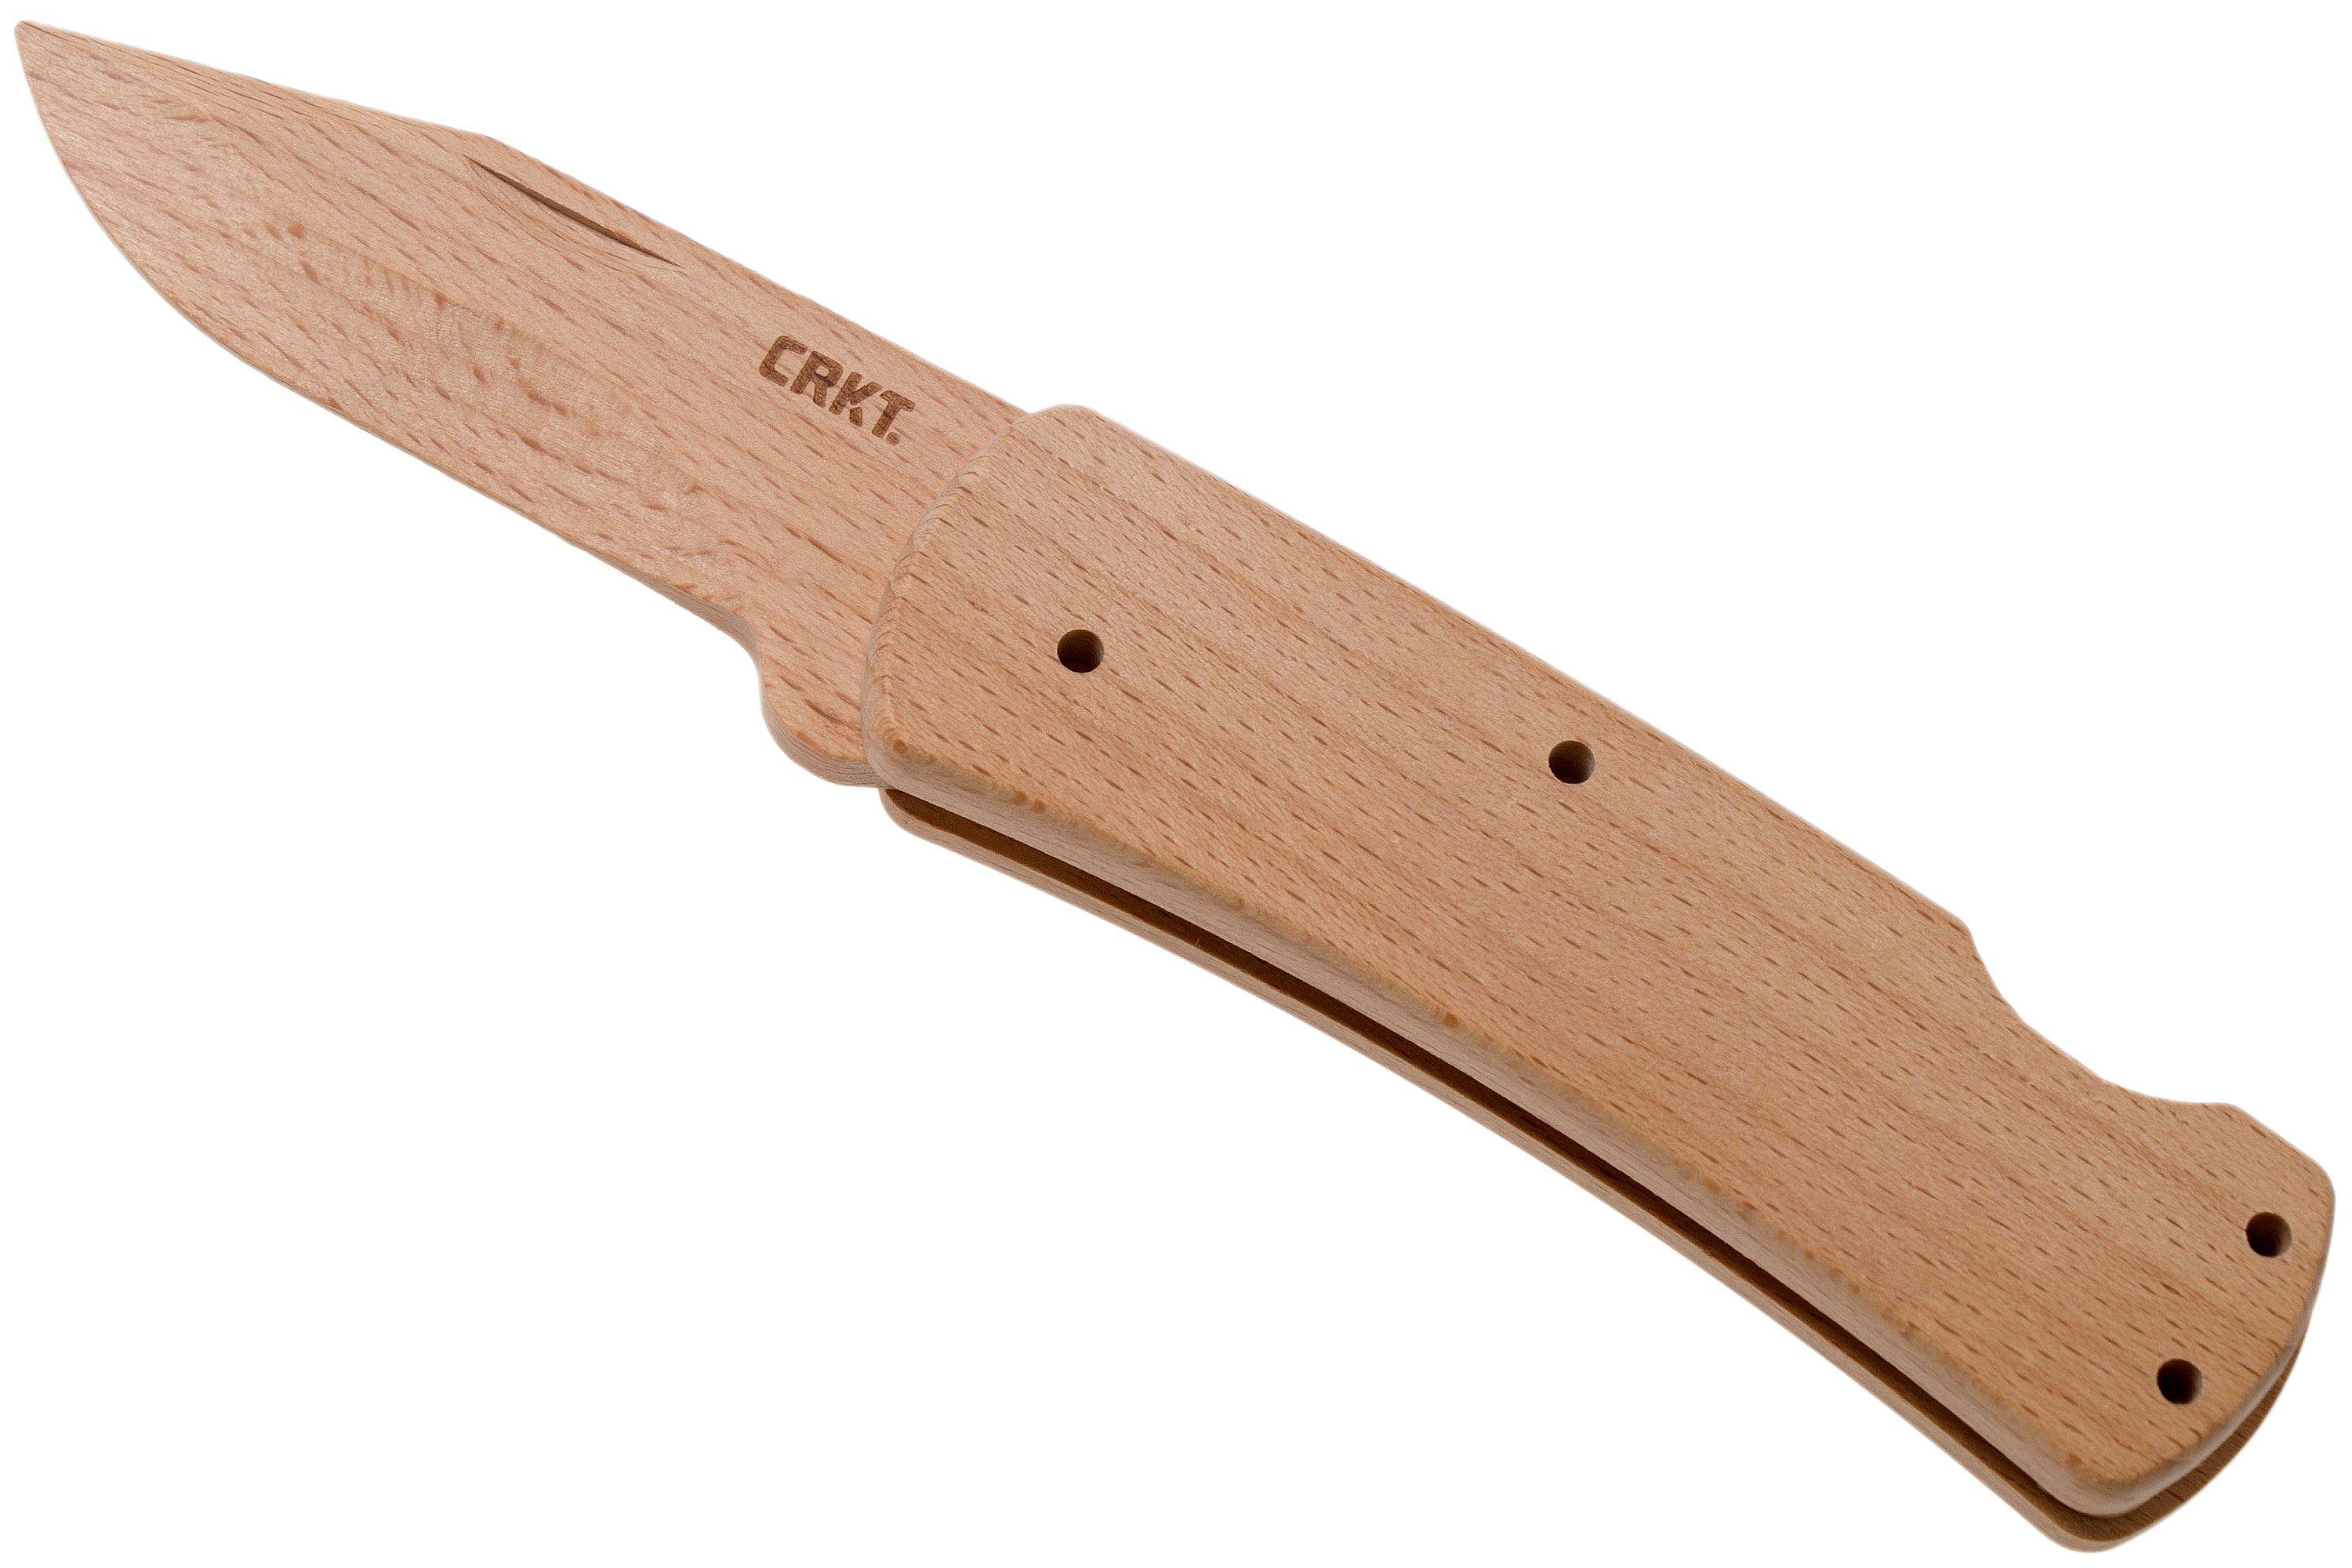 CRKT Nathan's Wooden Knife Safety Kit - Beech Wood, Pocket Knives